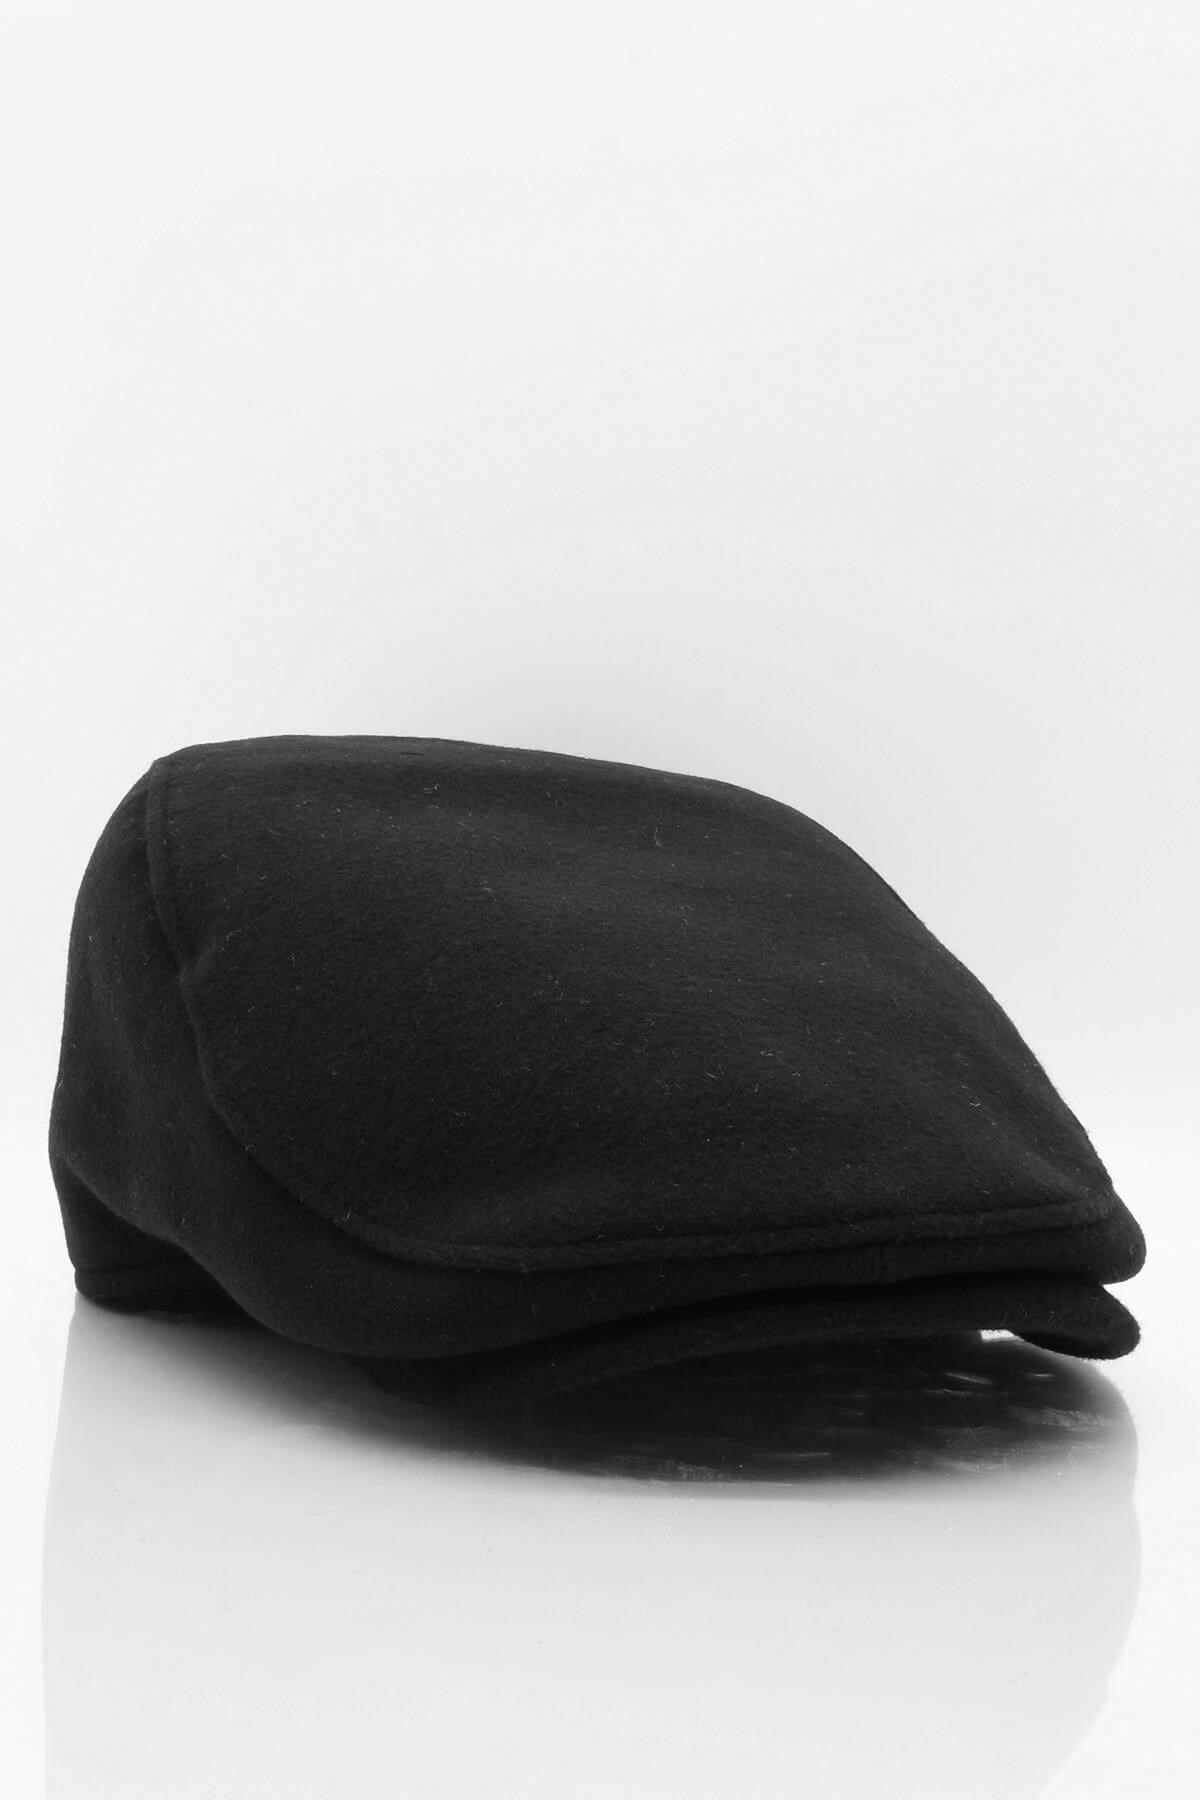 Külah Erkek Şapka Siyah Kışlık Trend Flat Cap Yün Kasket KLH7050